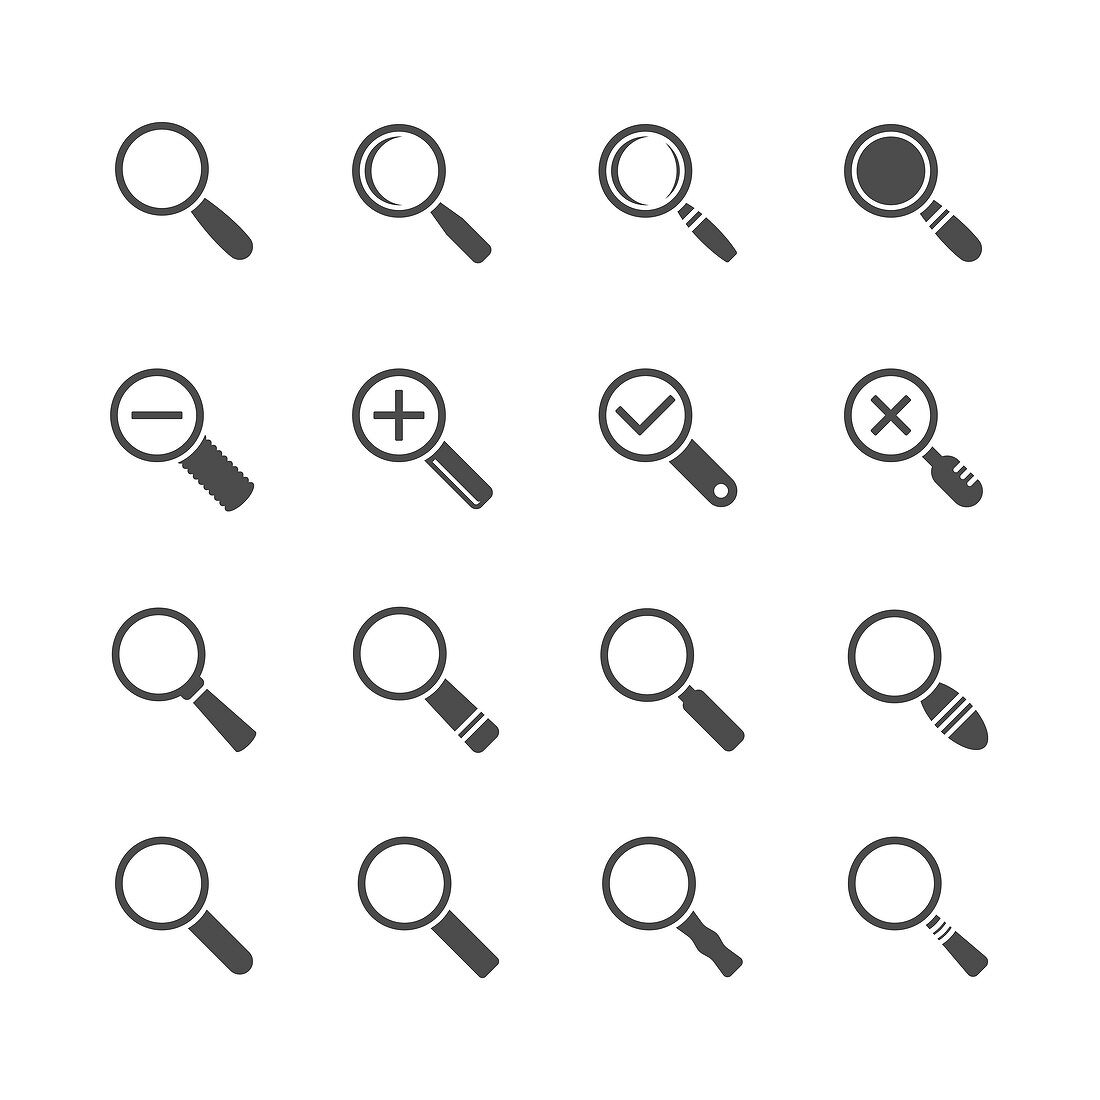 Magnifying glass icons, illustration